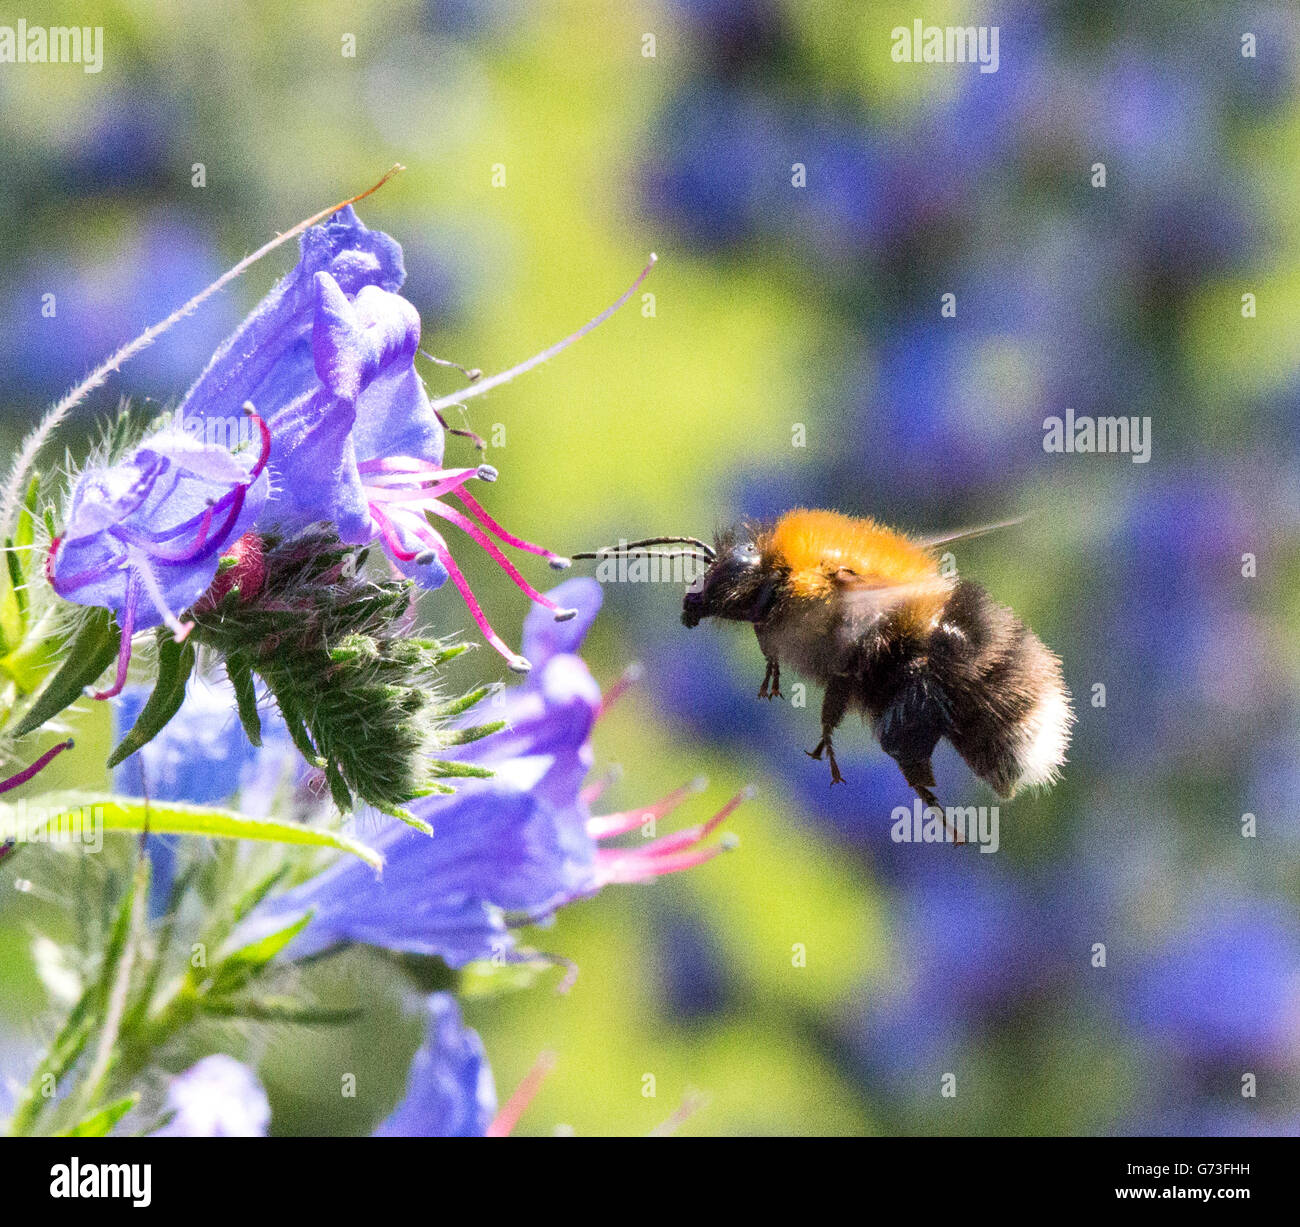 the honey bee among the flowers Stock Photo - Alamy